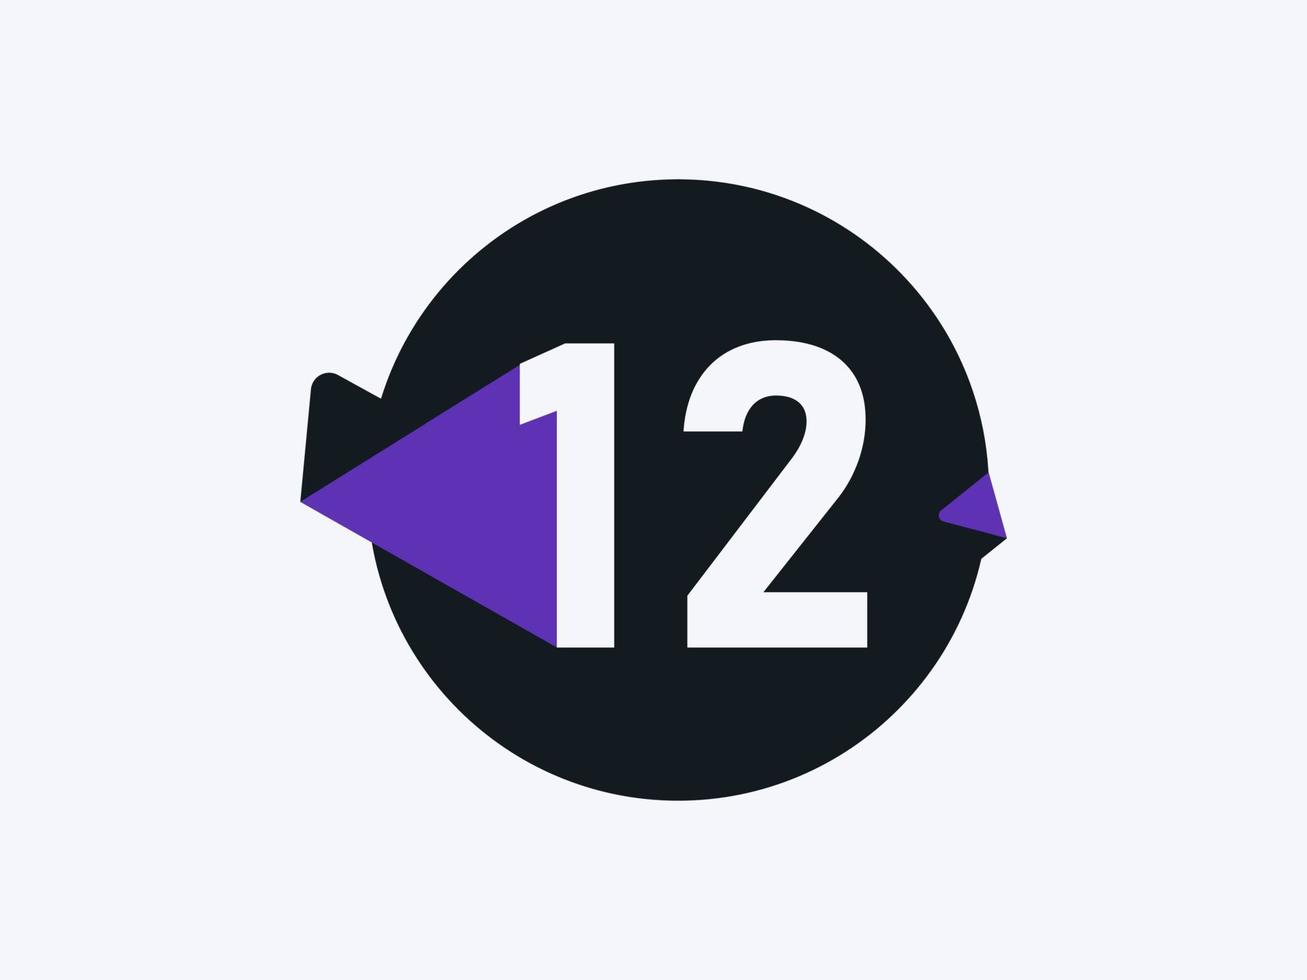 12 Number logo icon design vector image. Number logo icon design vector image